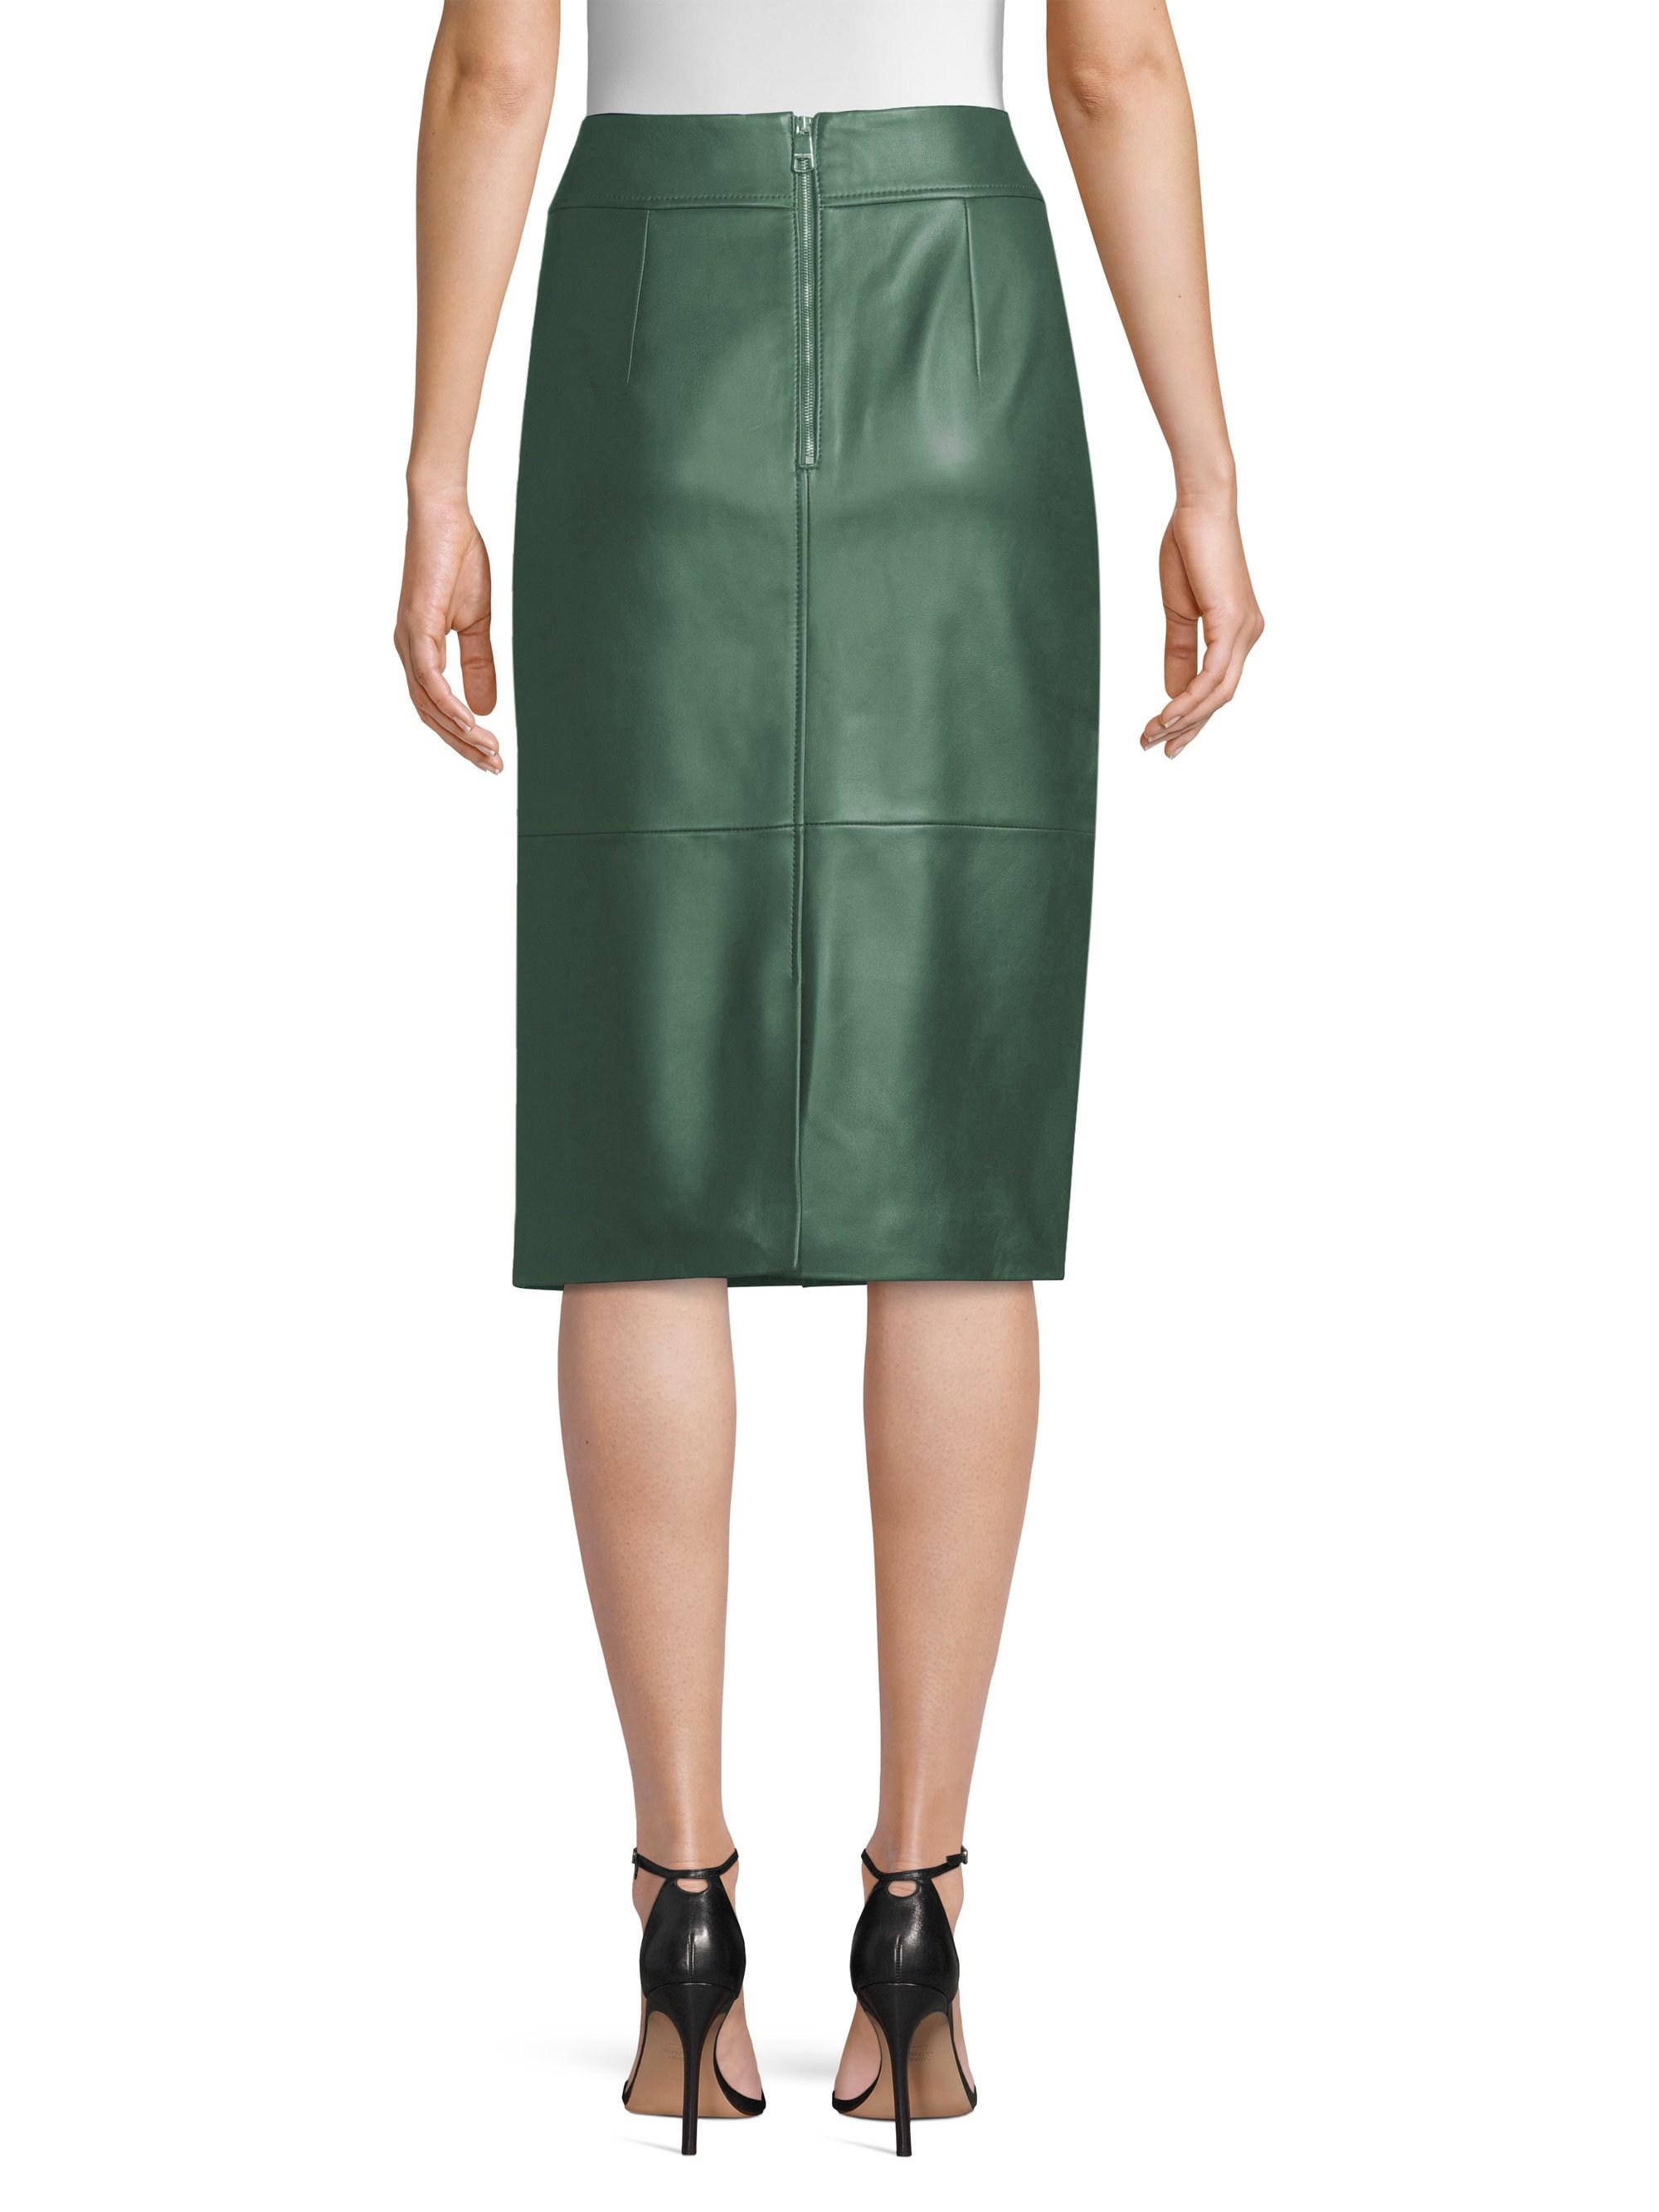 BOSS by HUGO BOSS Selrita Leather Pencil Skirt in Green - Lyst